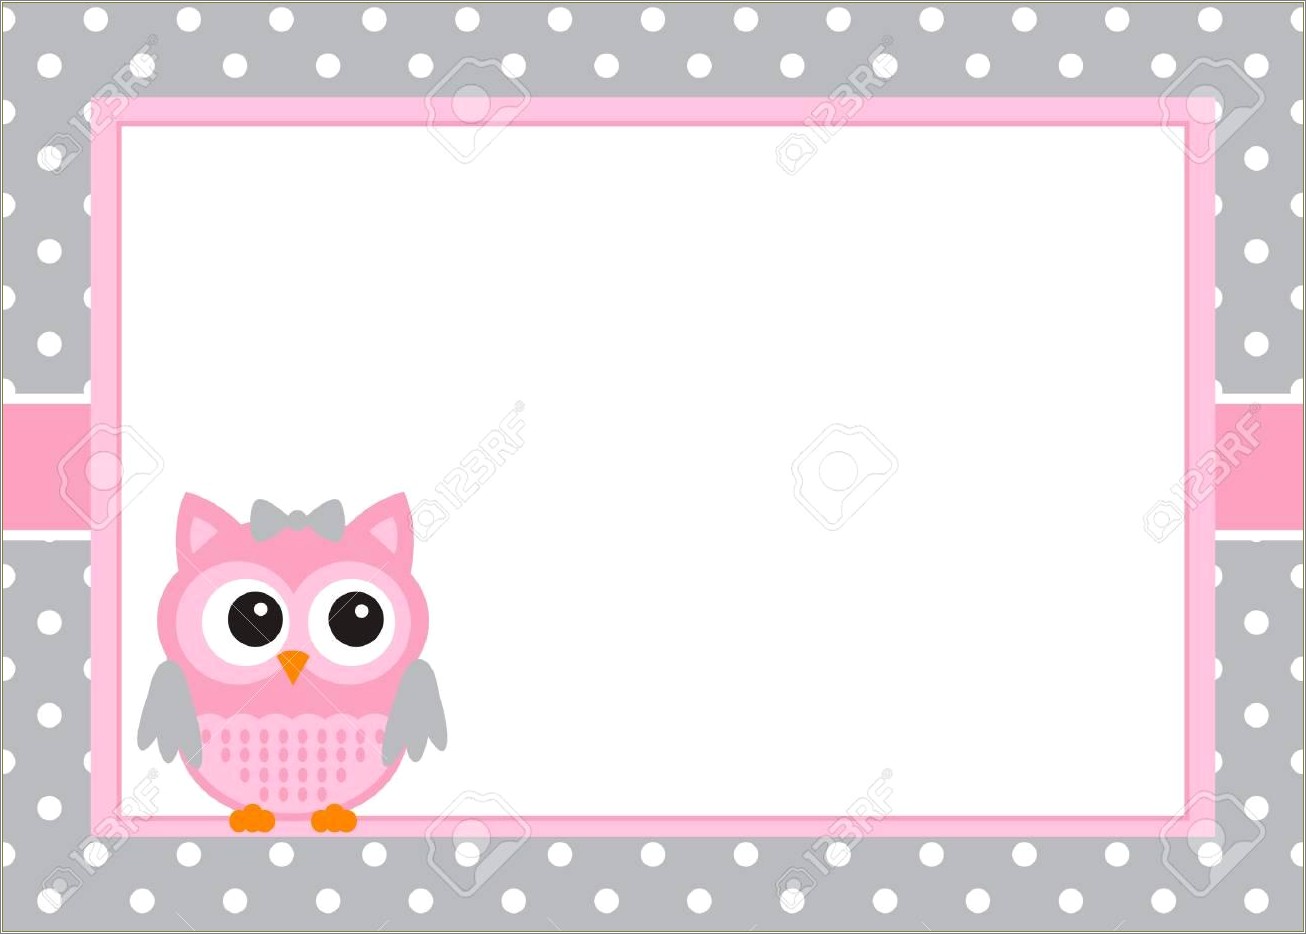 Free Owl Birthday Party Invitation Template